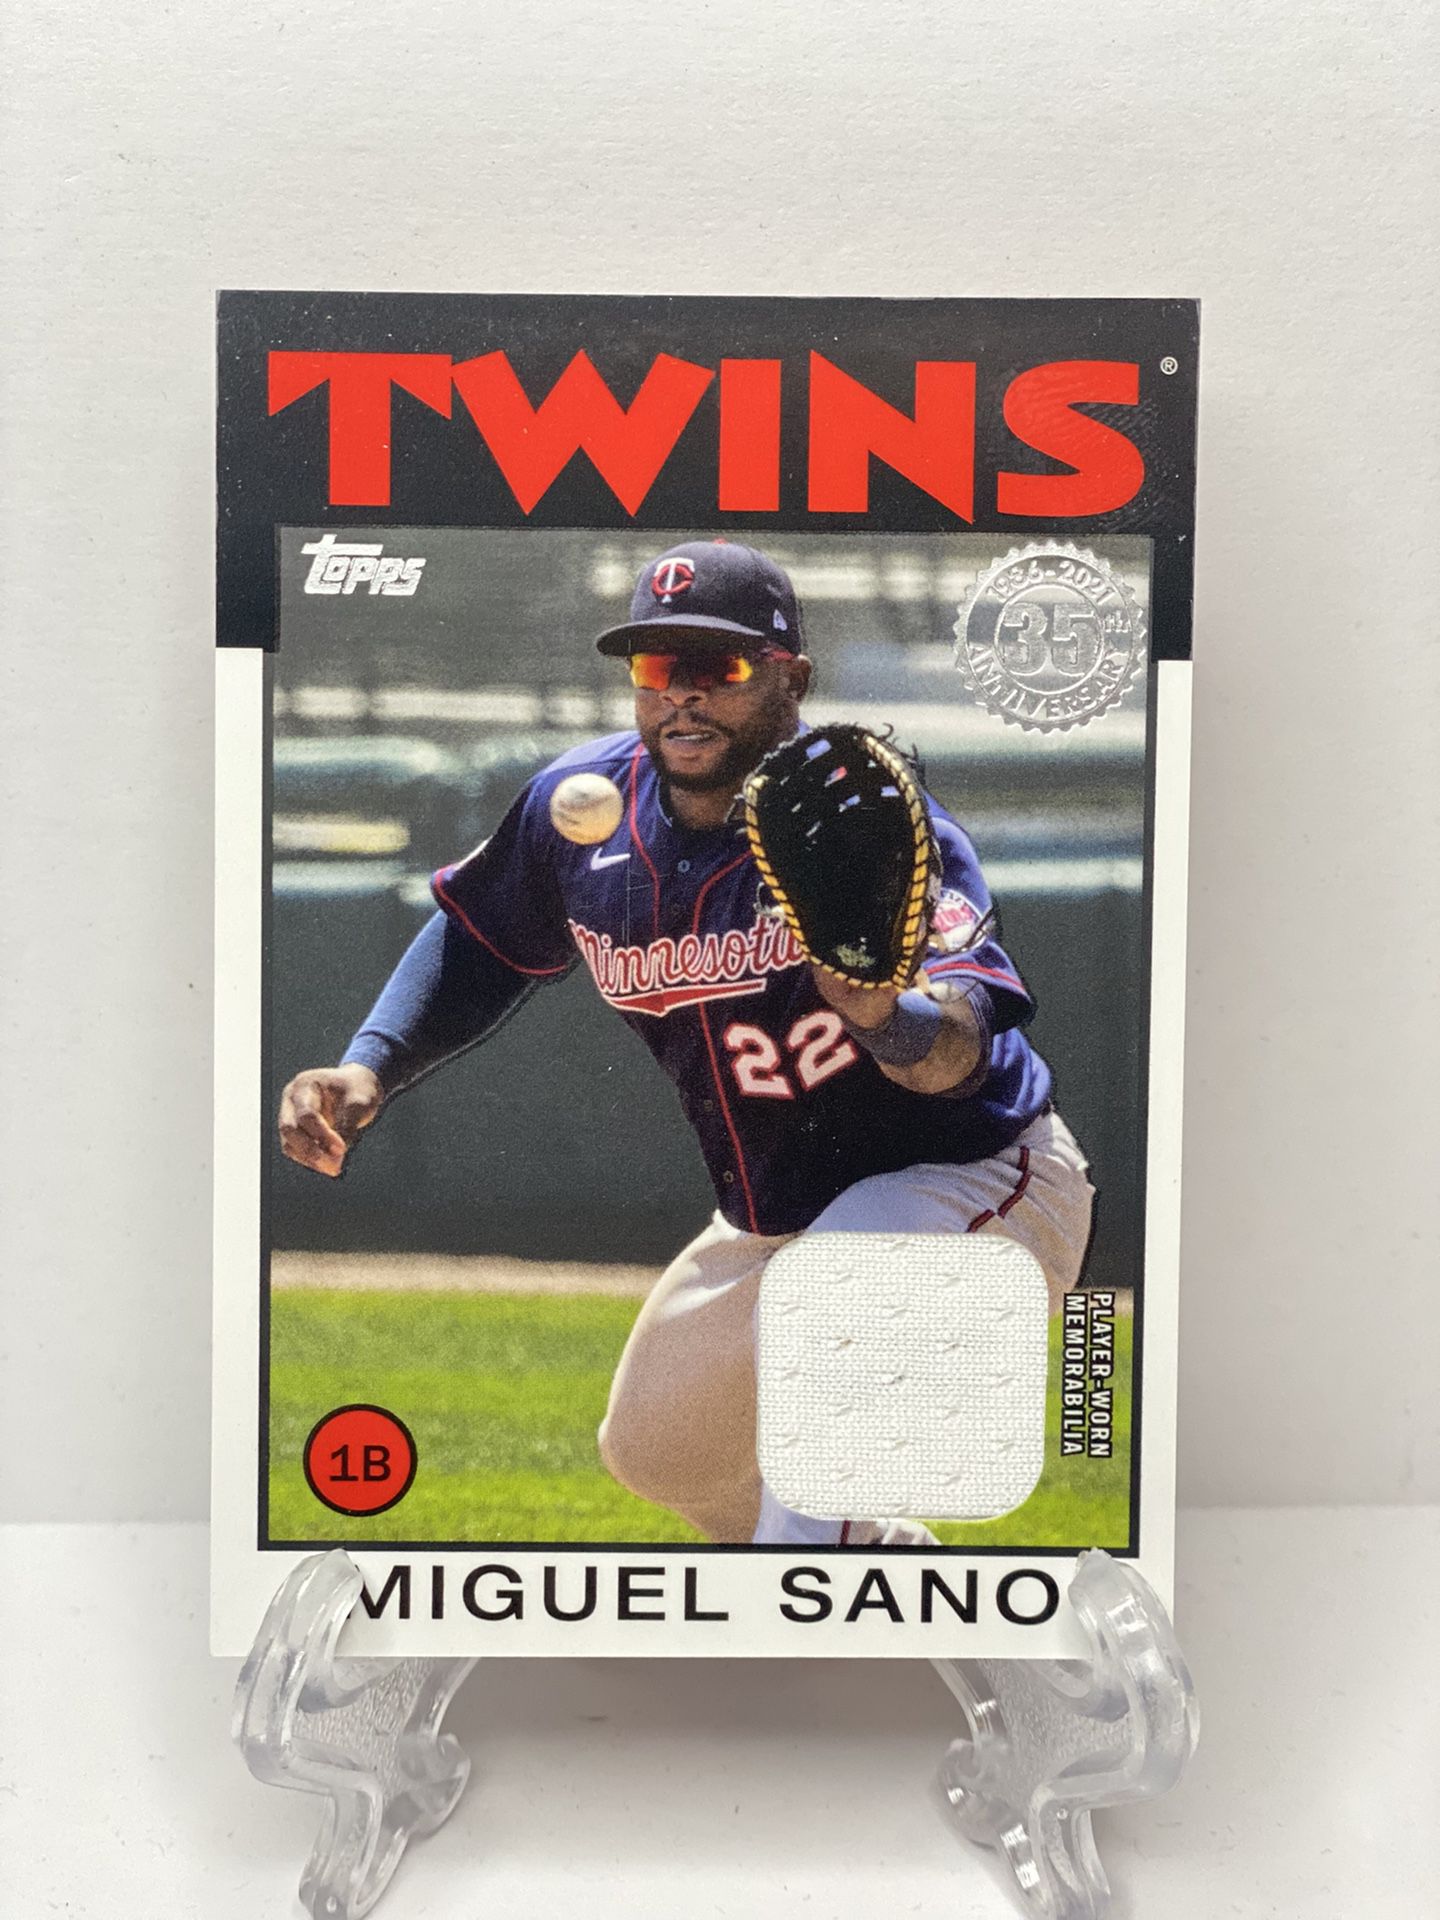 Miguel Sano player worn jersey patch baseball card (Minnesota